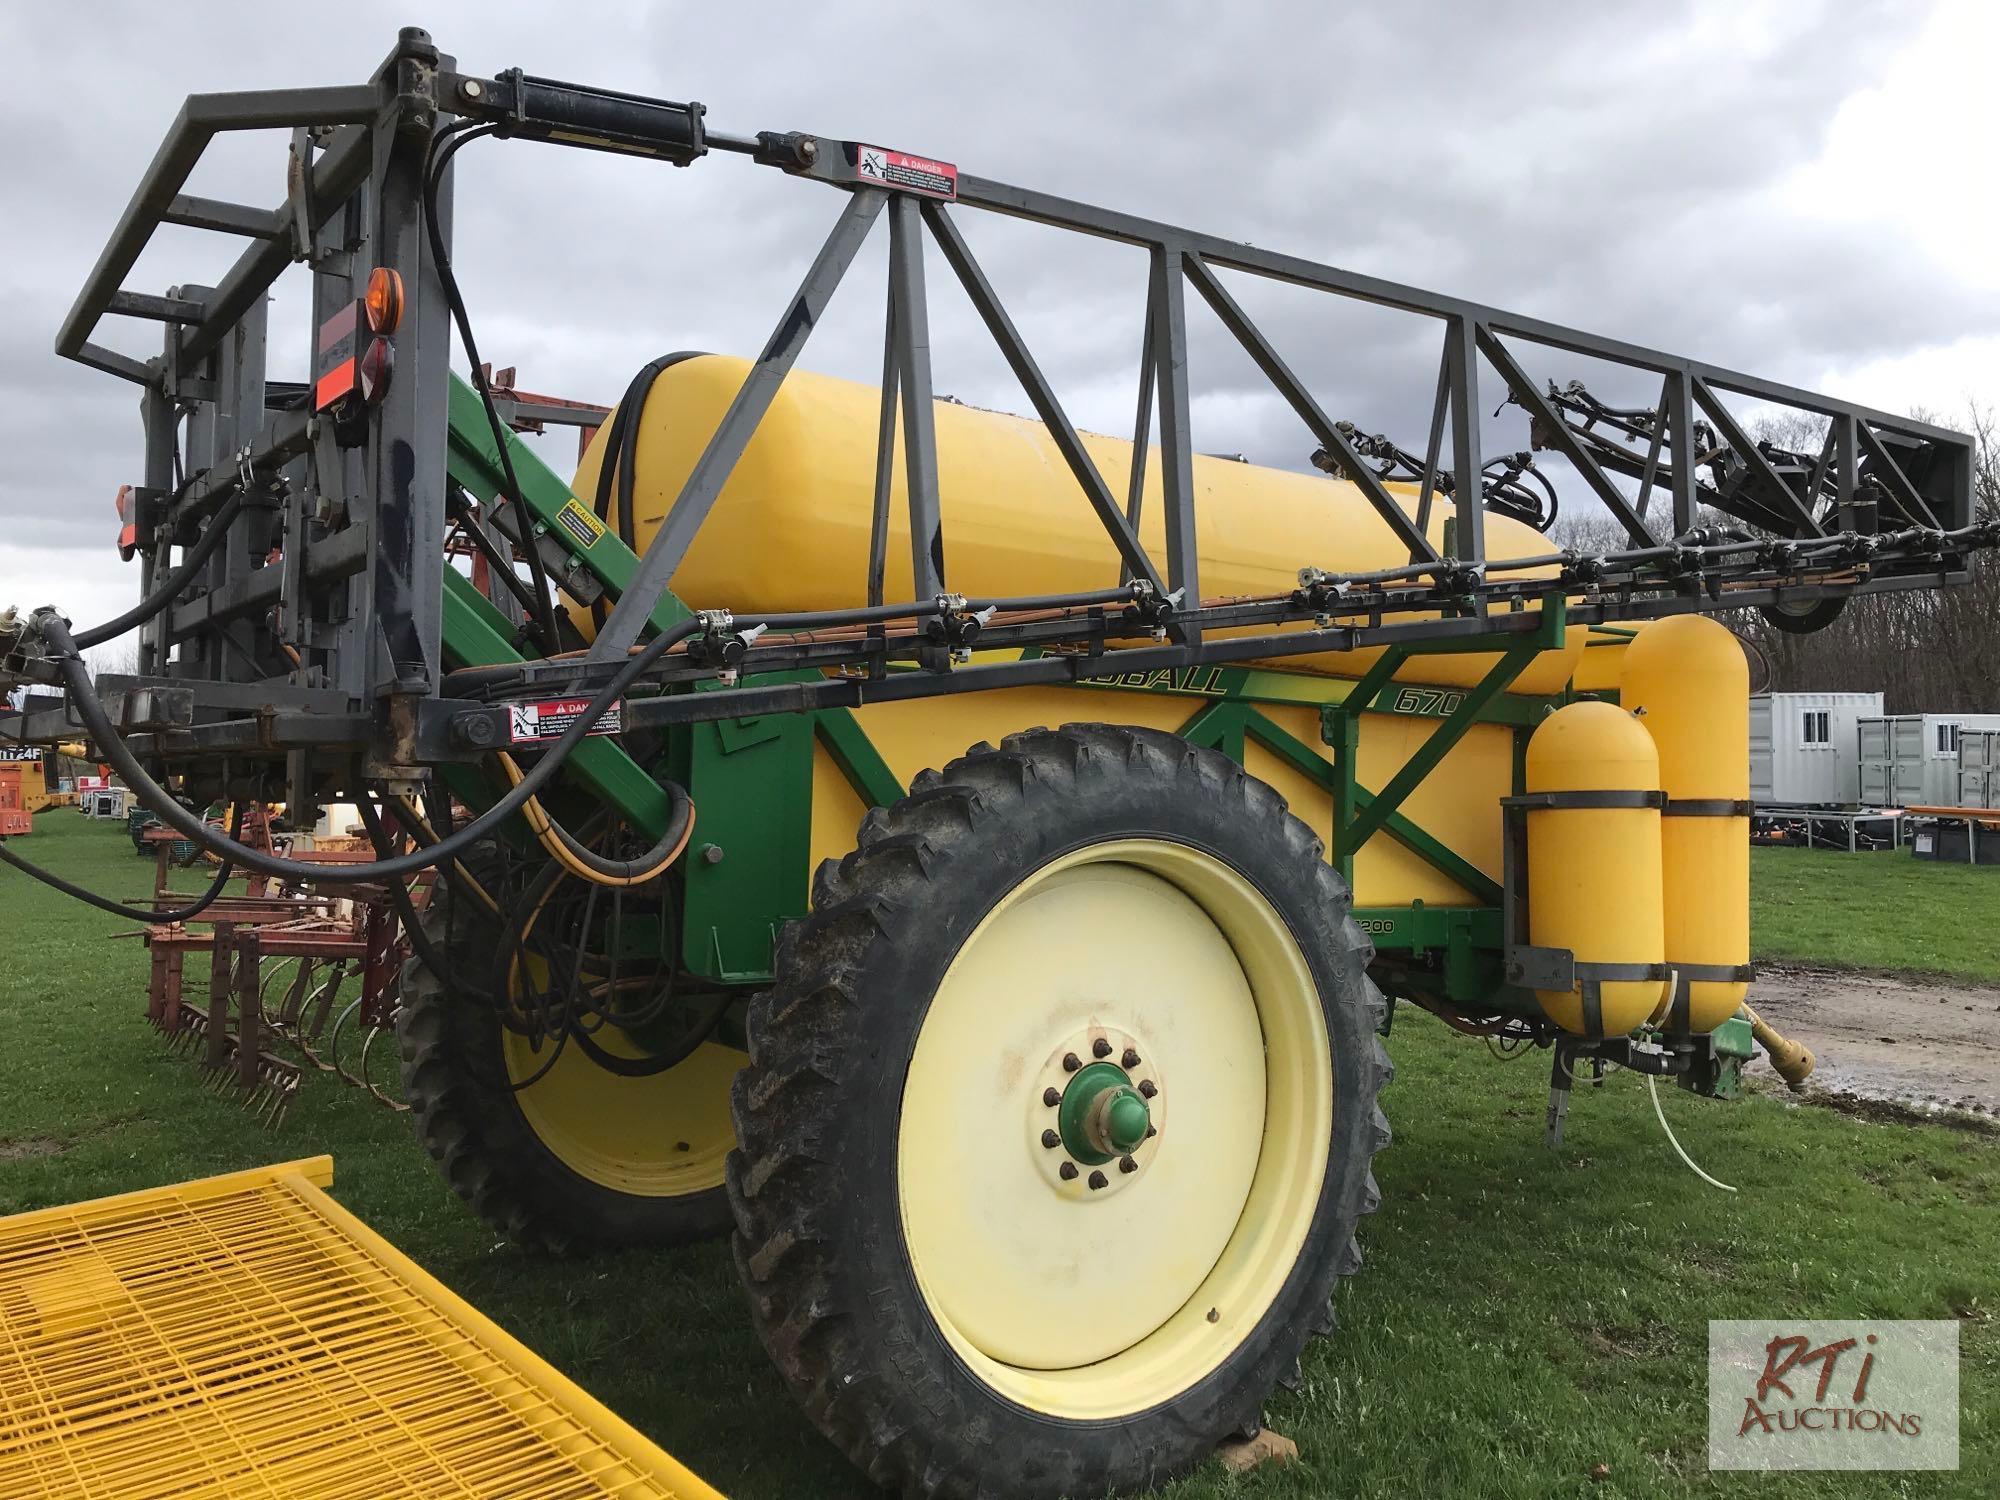 Redball 670 1200 high wheel crop sprayer with 60ft boom, PTO pump, monitor